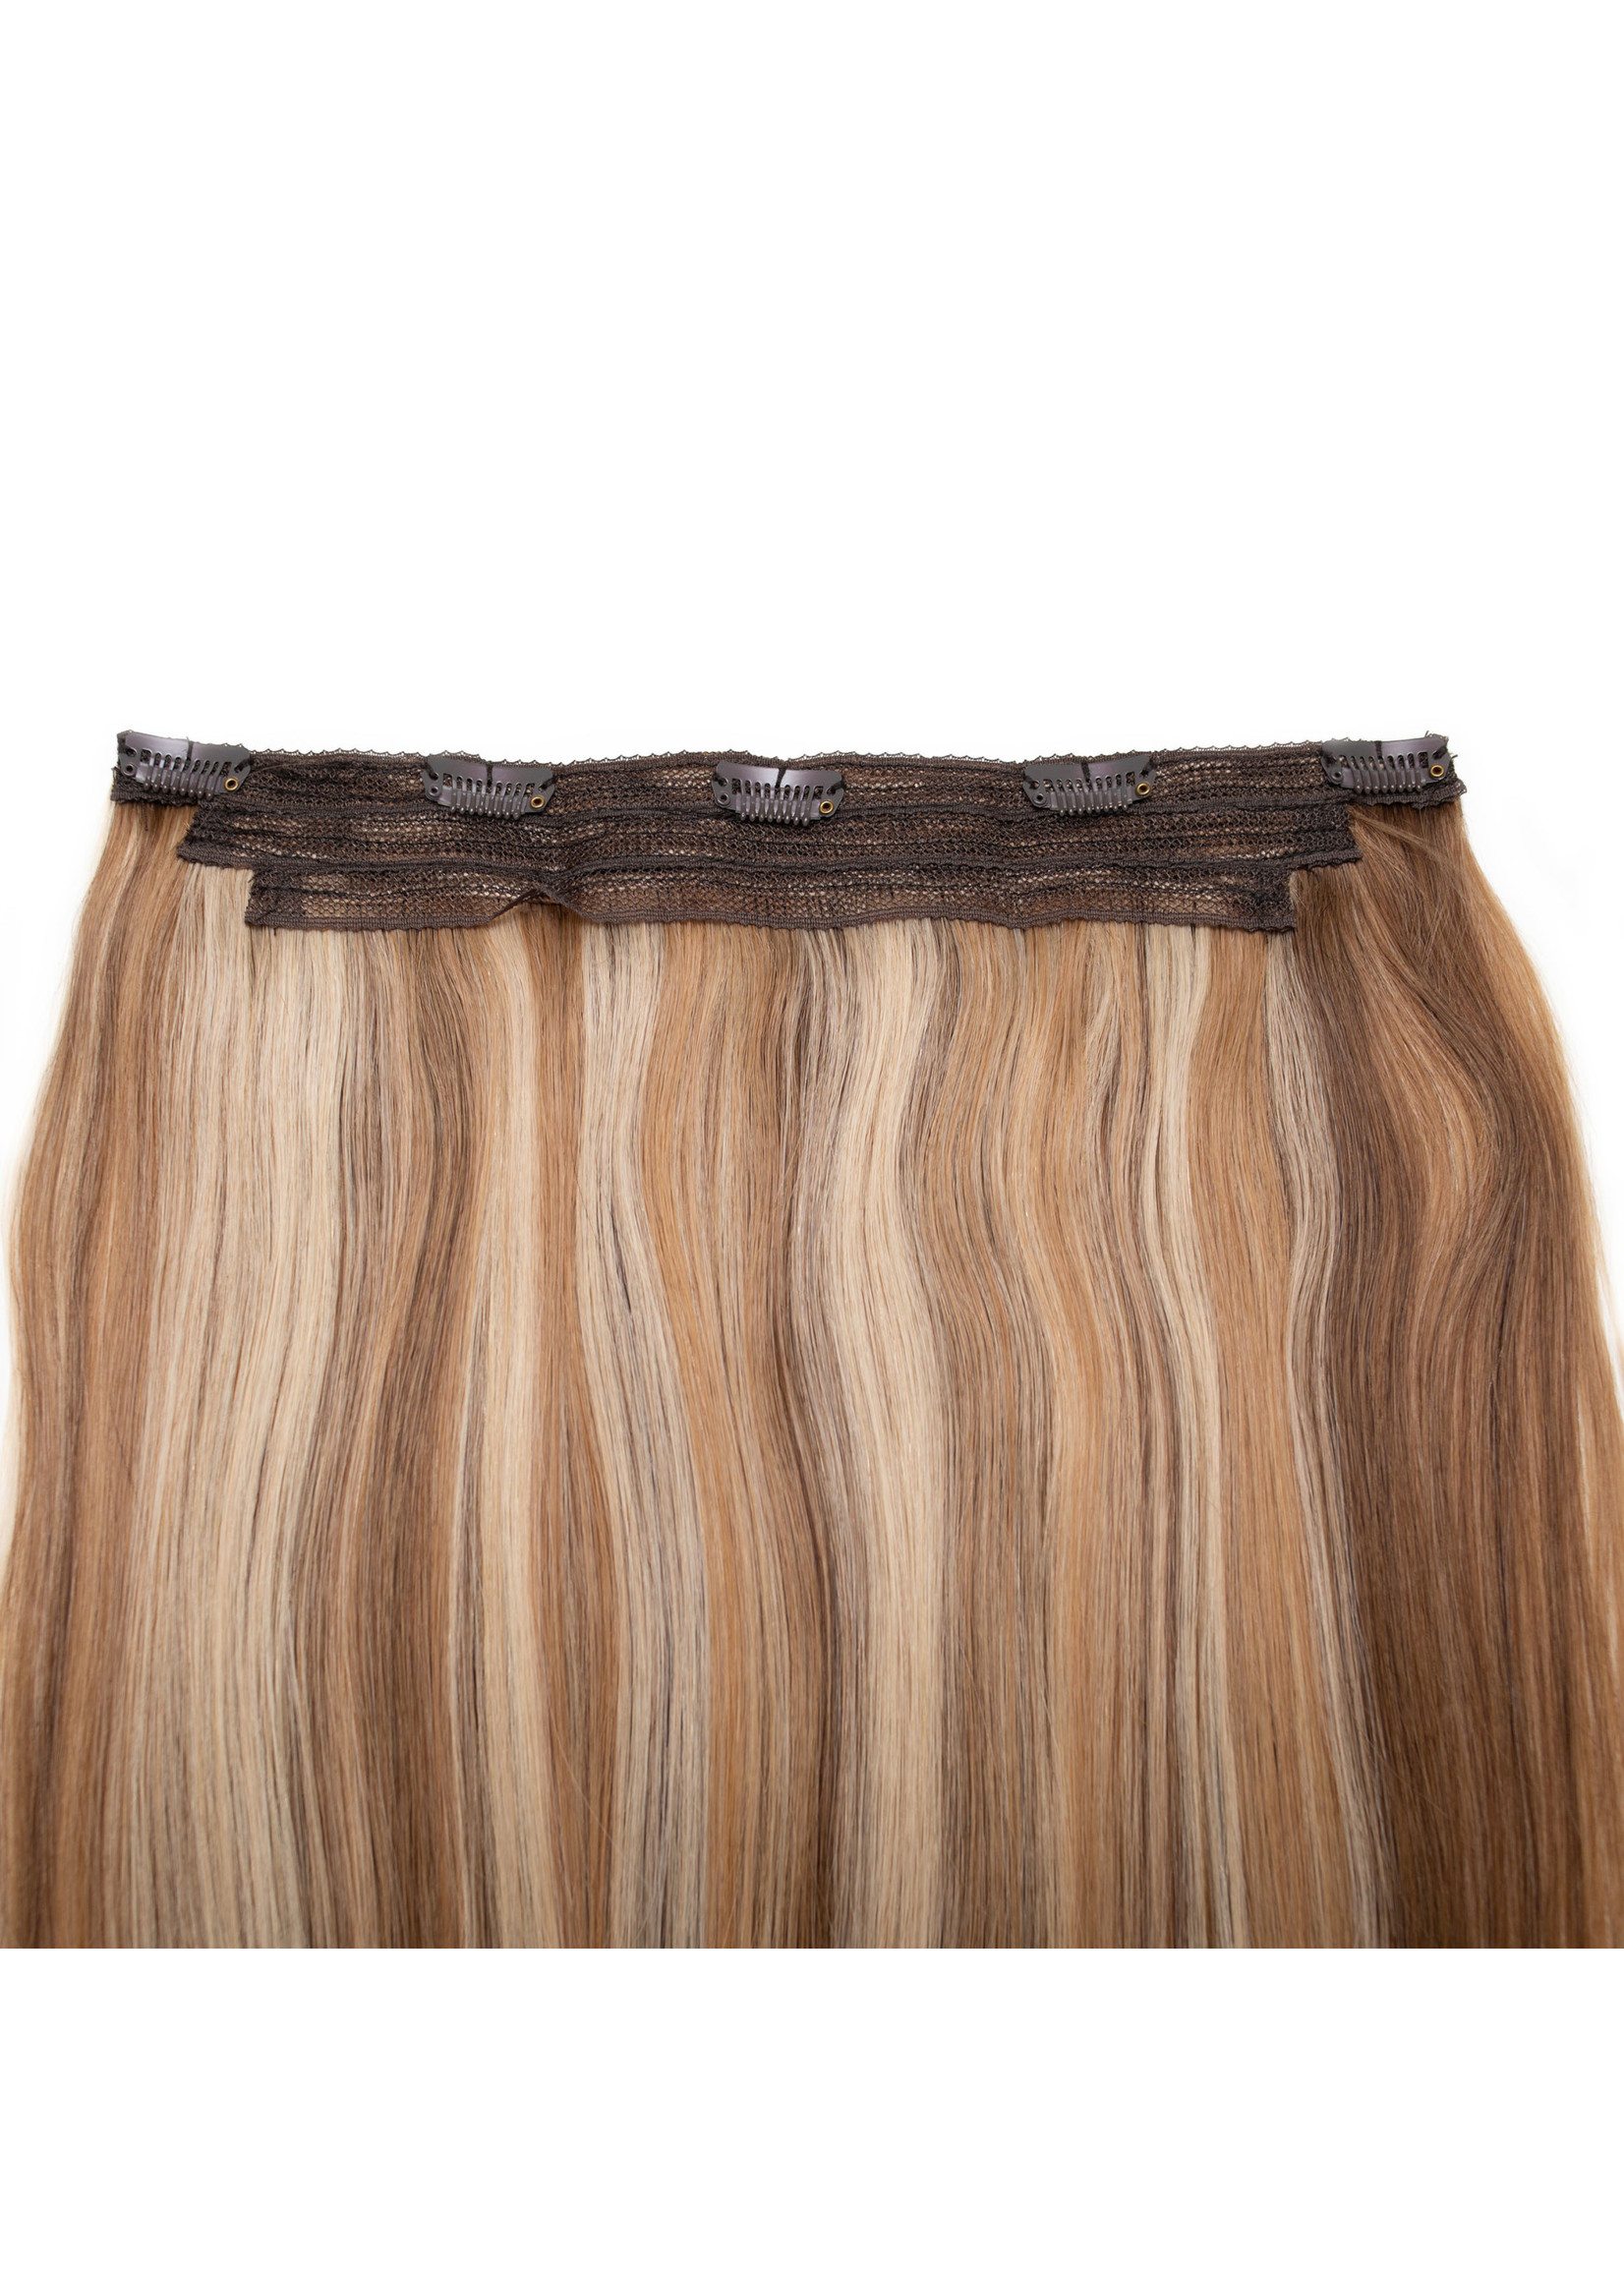 Seamless1 Seamless1 Human Hair Clip-in 1pc Hair Extensions 21.5 Inches - Vanilla Blend